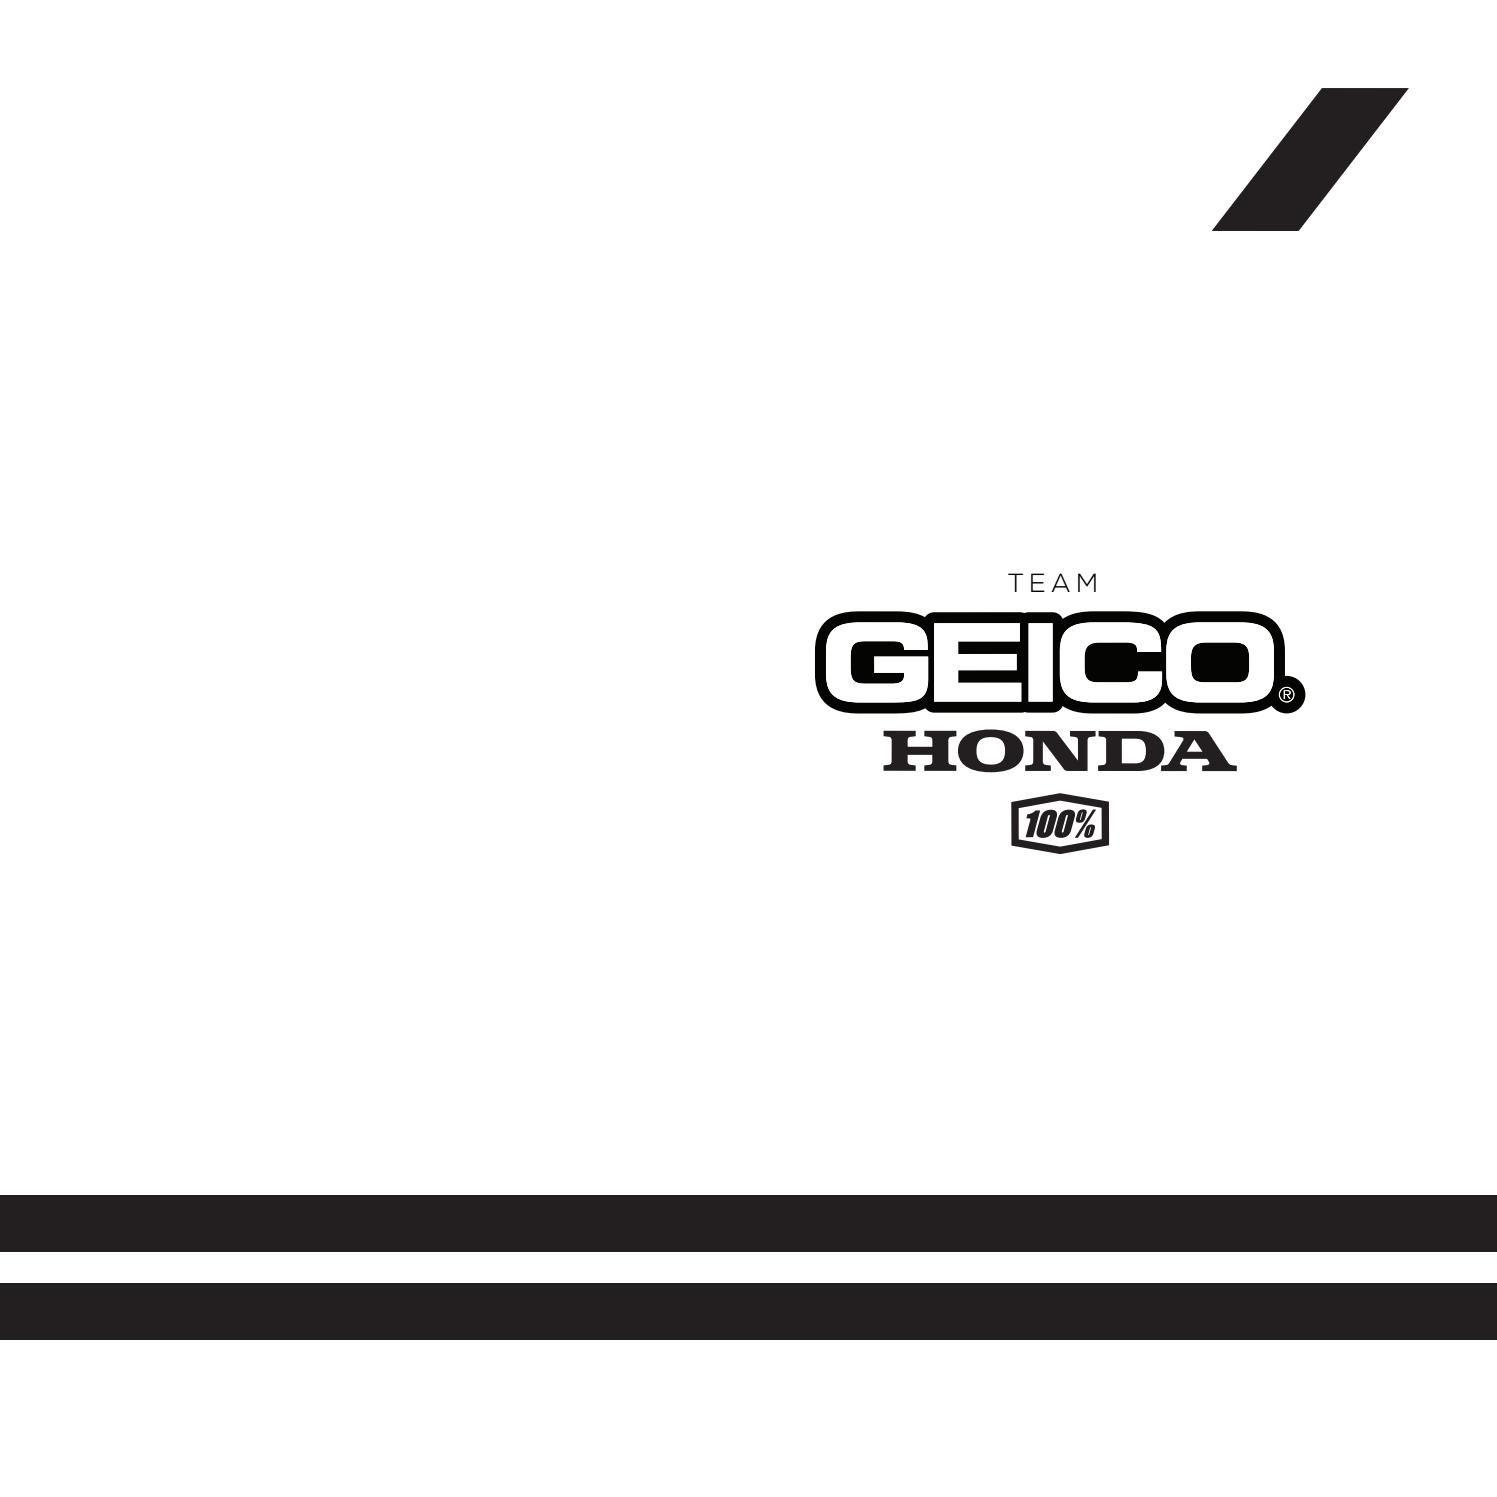 Black GEICO Logo - 2019 GEICO Honda Team Collection by 100% - issuu